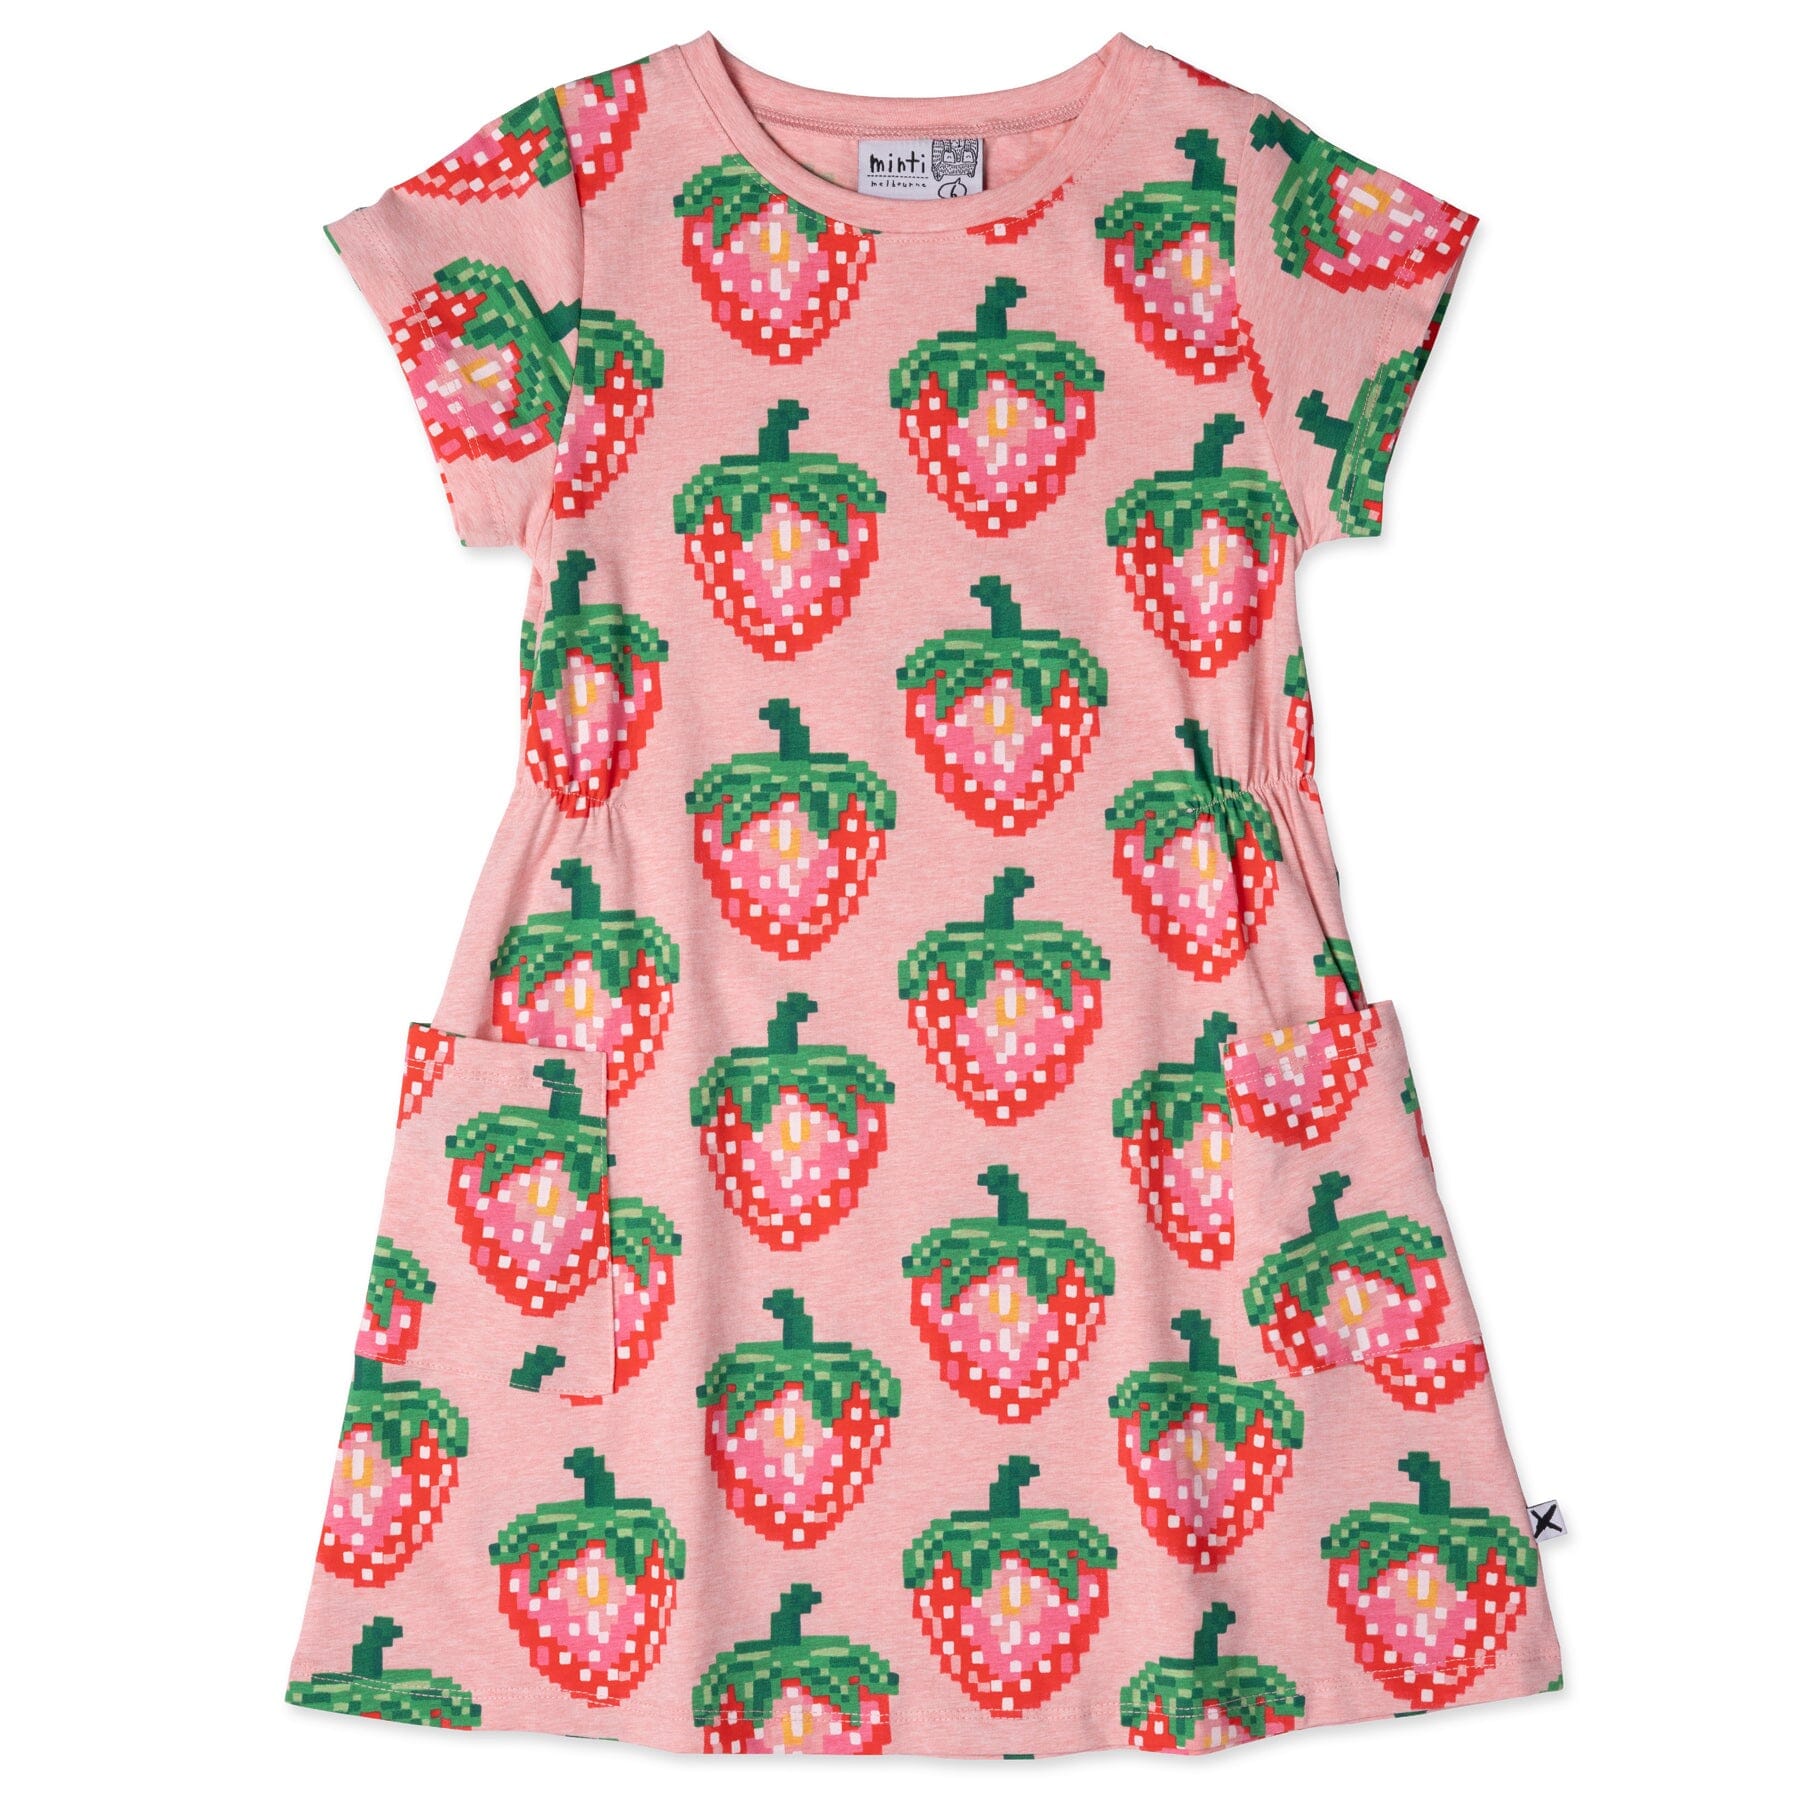 Pixelled Strawberries Dress